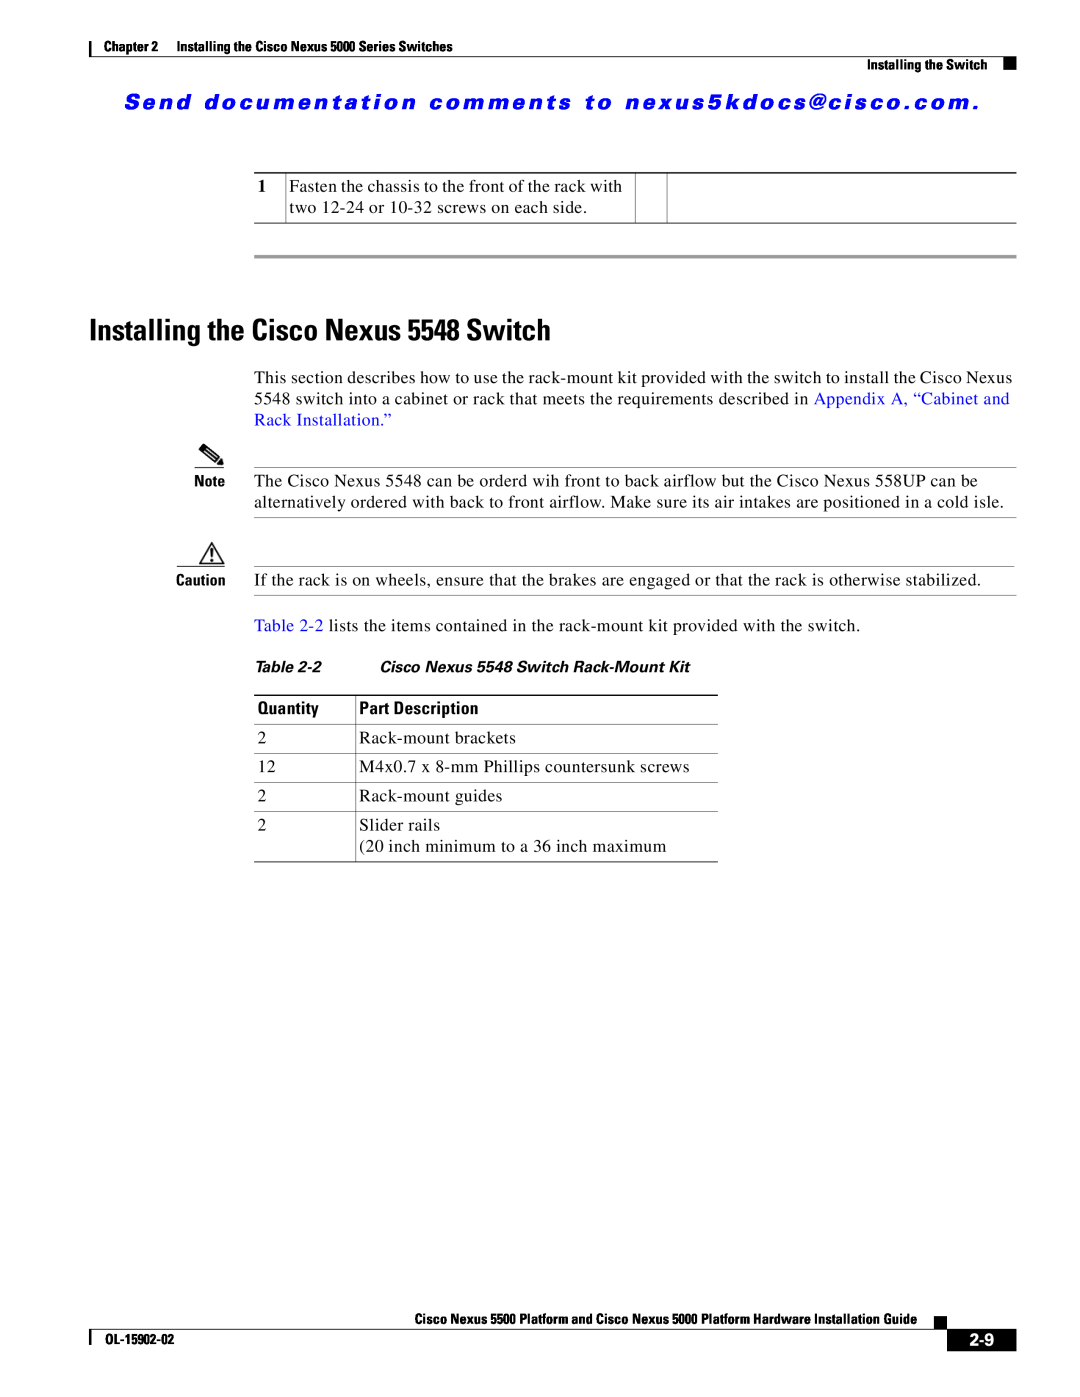 Cisco Systems 5000 manual Installing the Cisco Nexus 5548 Switch, Cisco Nexus 5548 Switch Rack-Mount Kit 